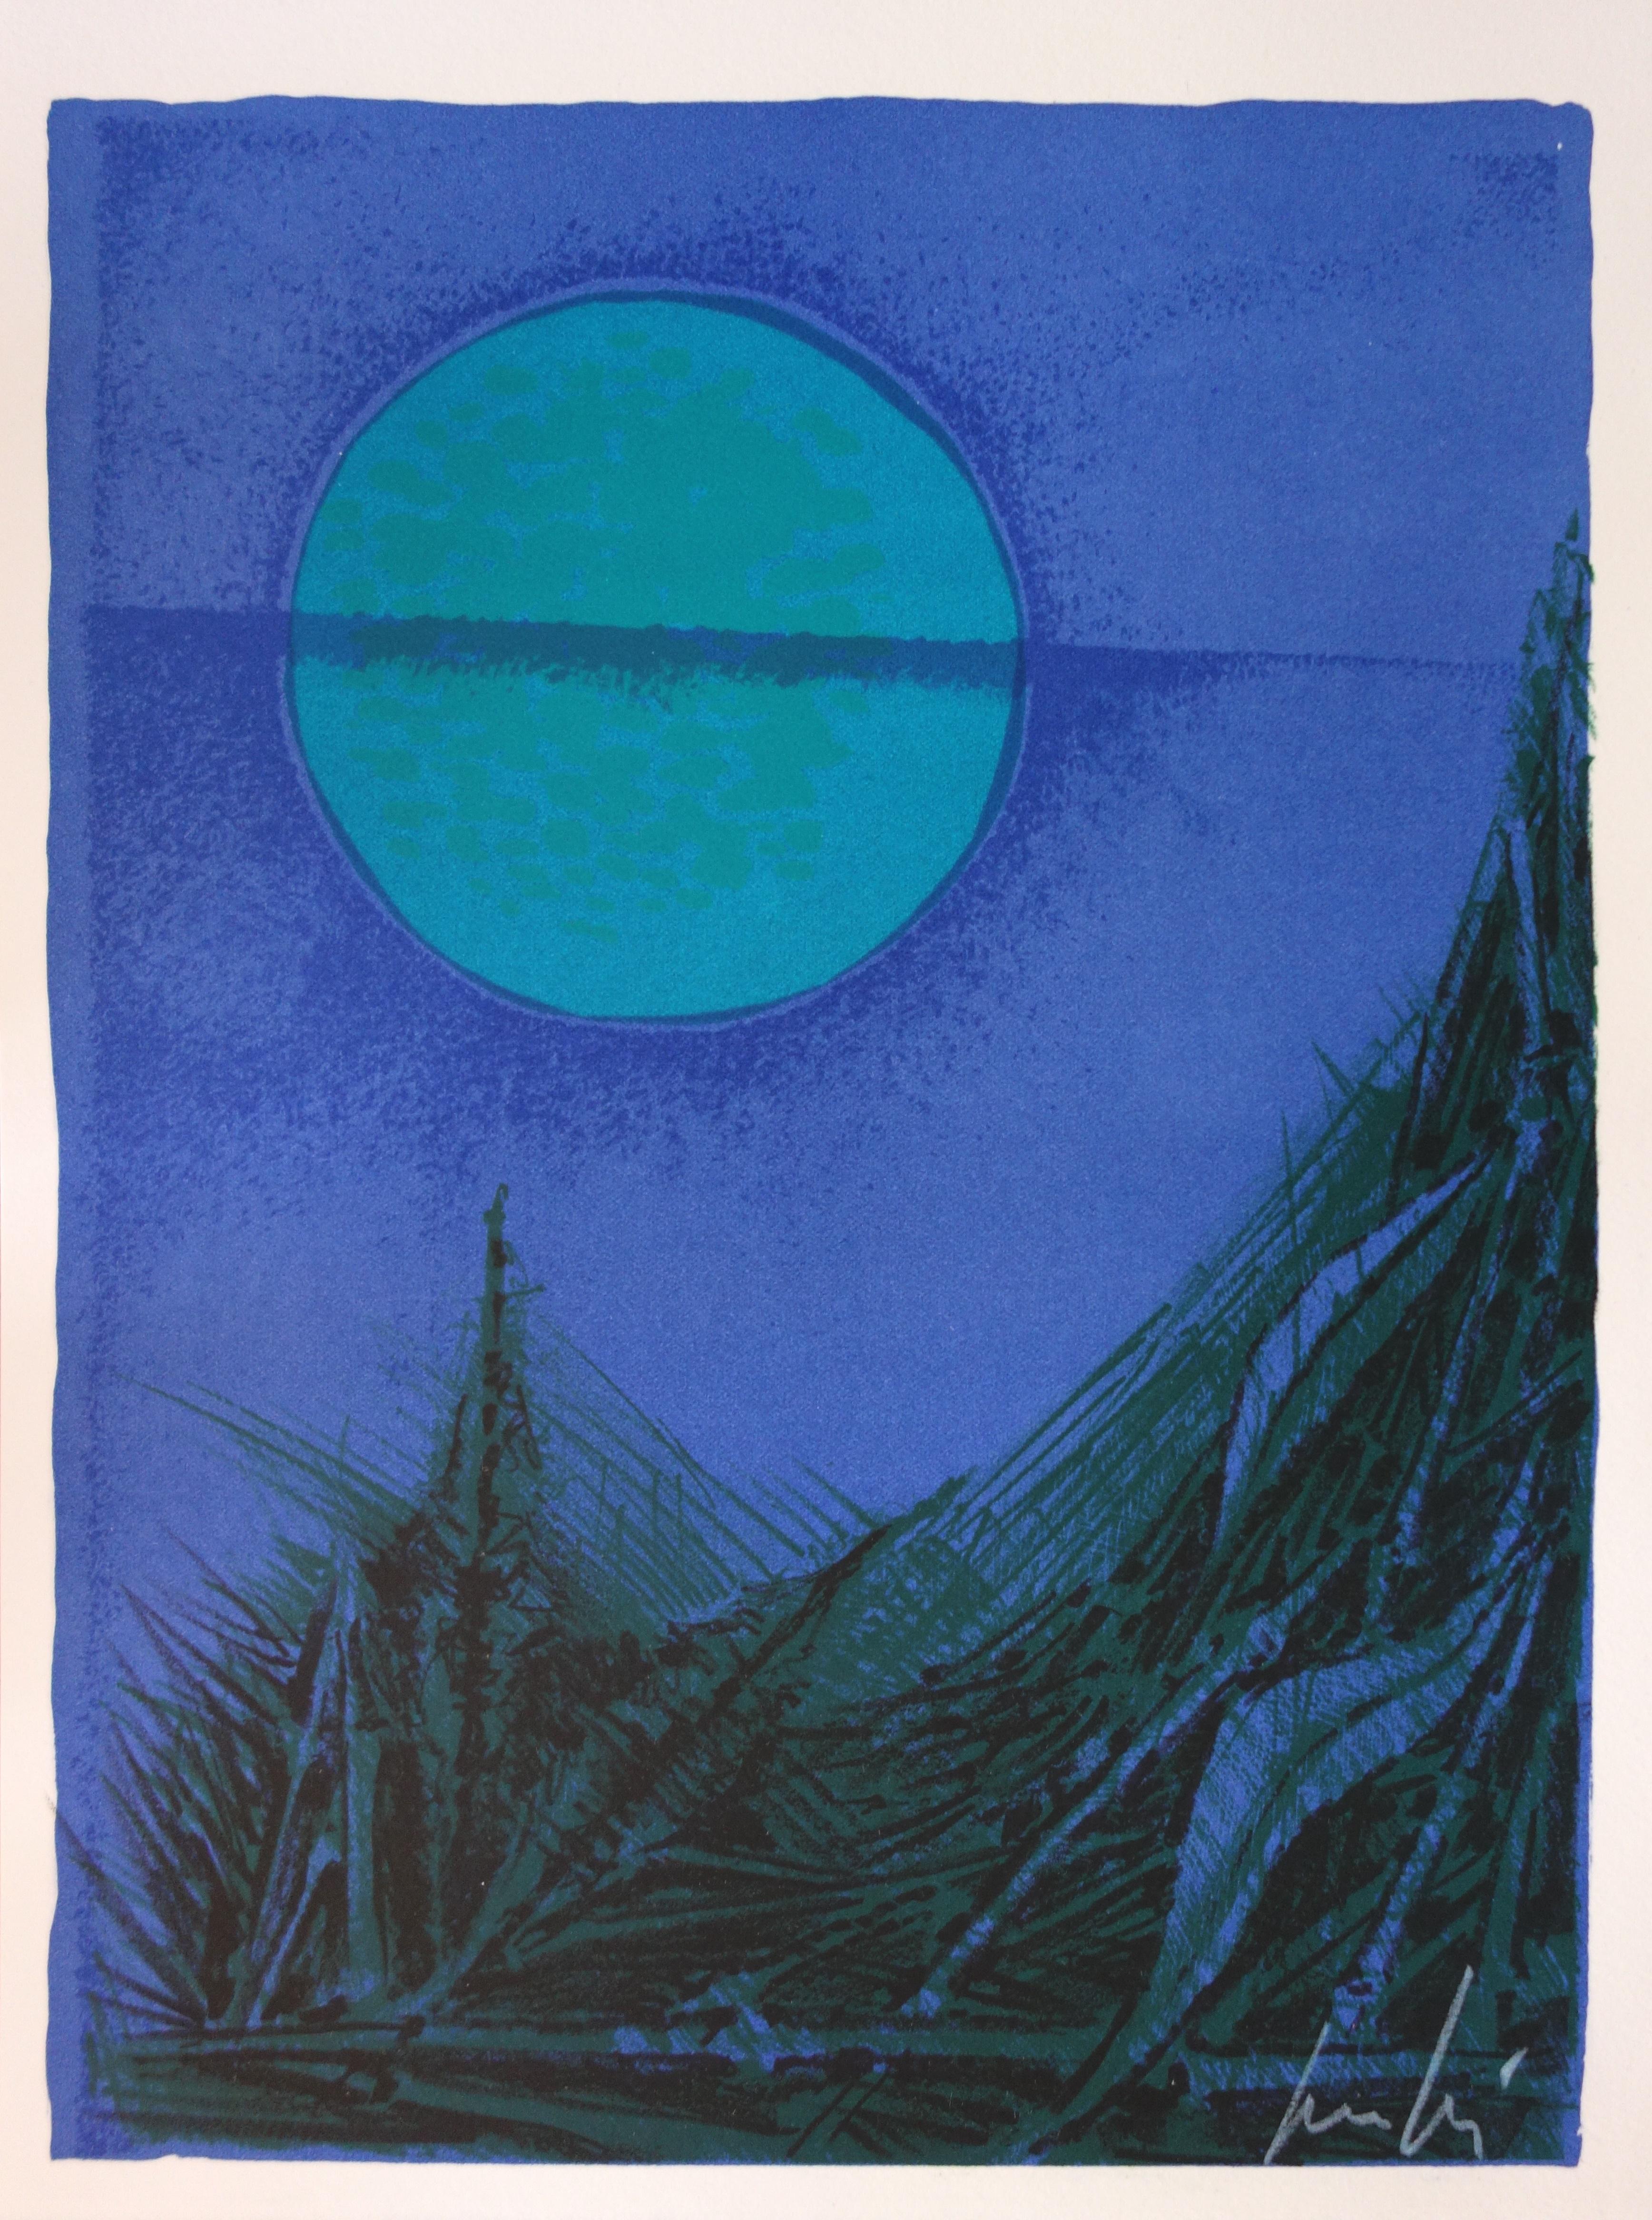 Cesare Peverelli Landscape Print - Surrealist Landscape with Blue Moon - Original handsigned lithograph